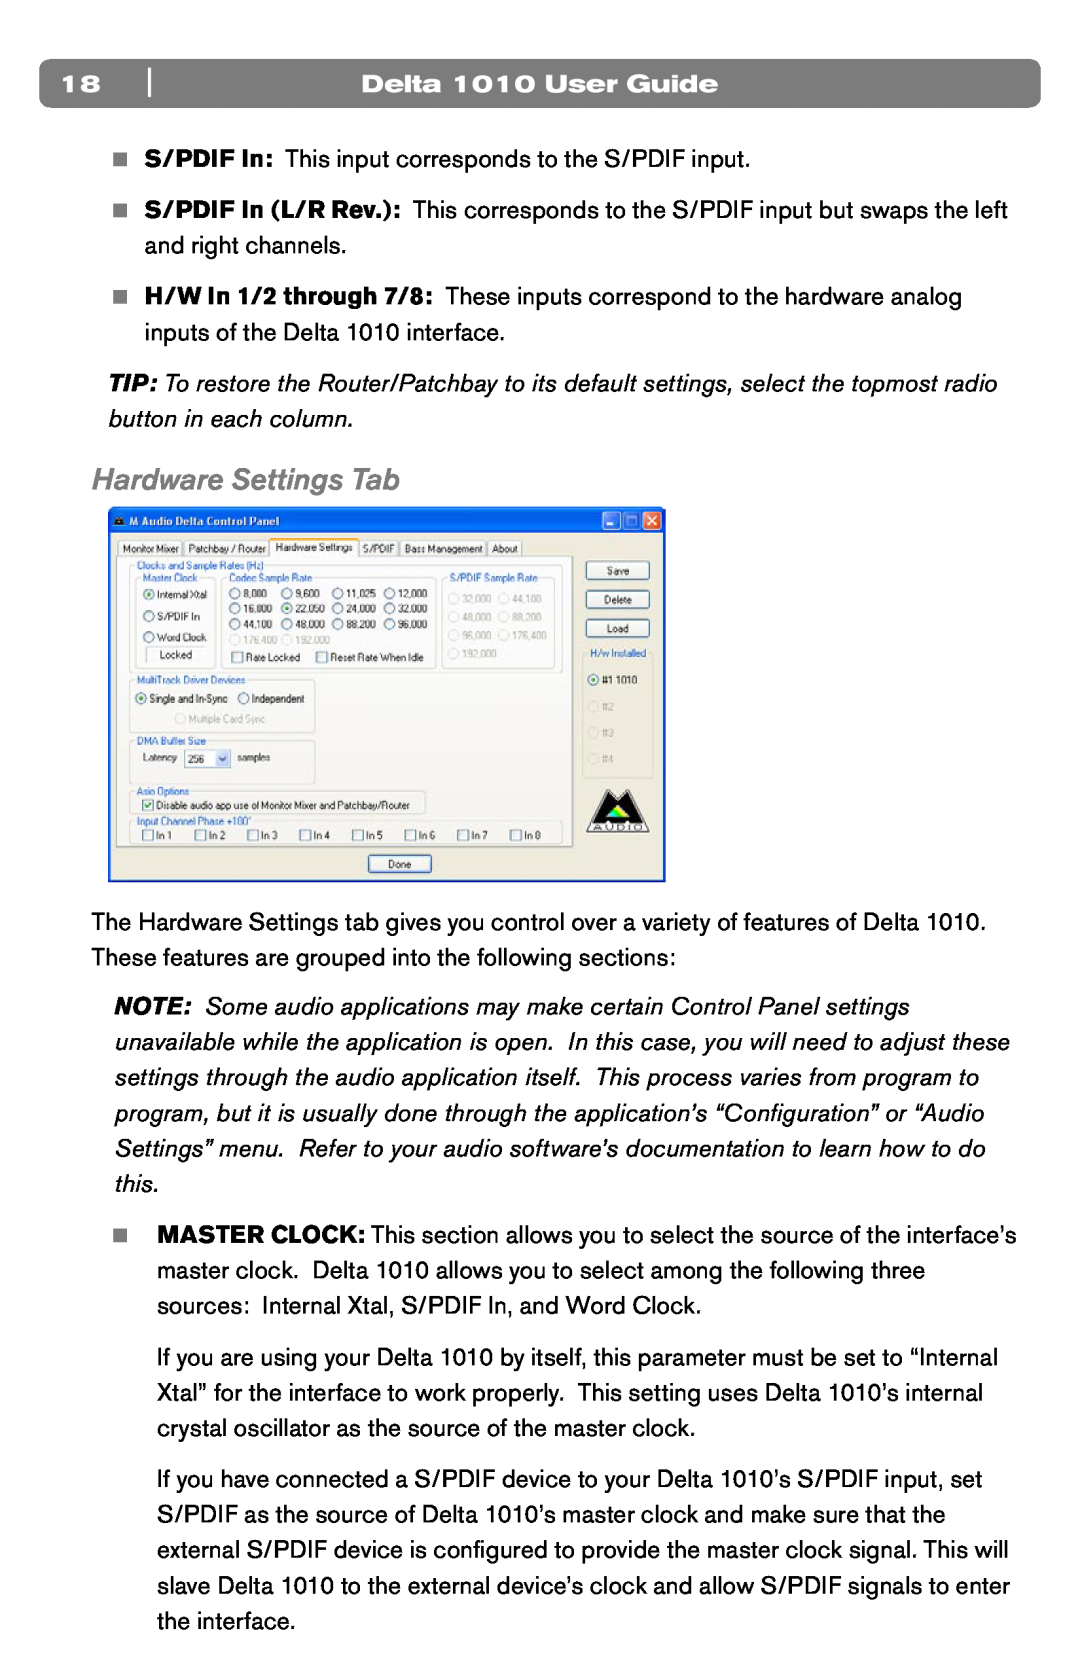 M-Audio DELTA 1010 manual Hardware Settings Tab, Delta 1010 User Guide 